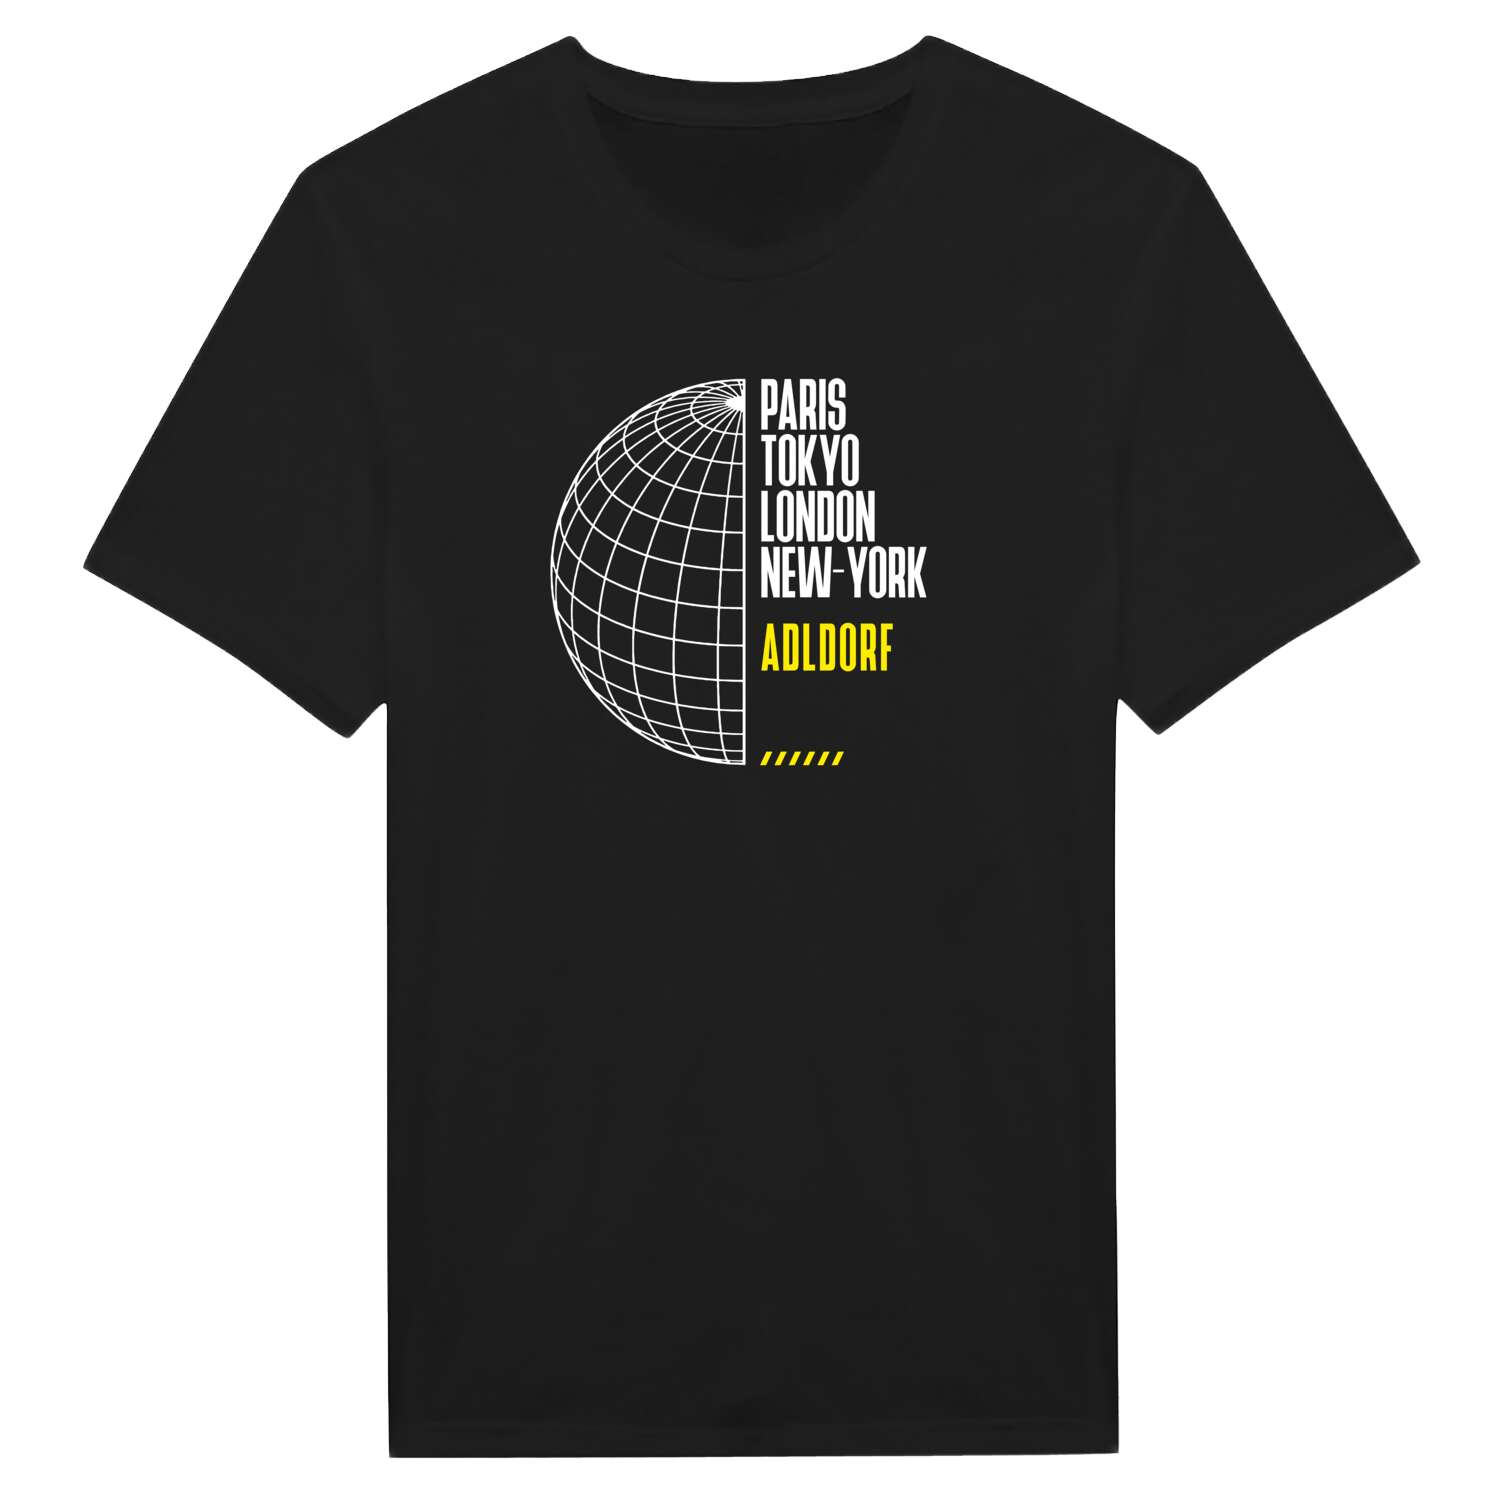 Adldorf T-Shirt »Paris Tokyo London«